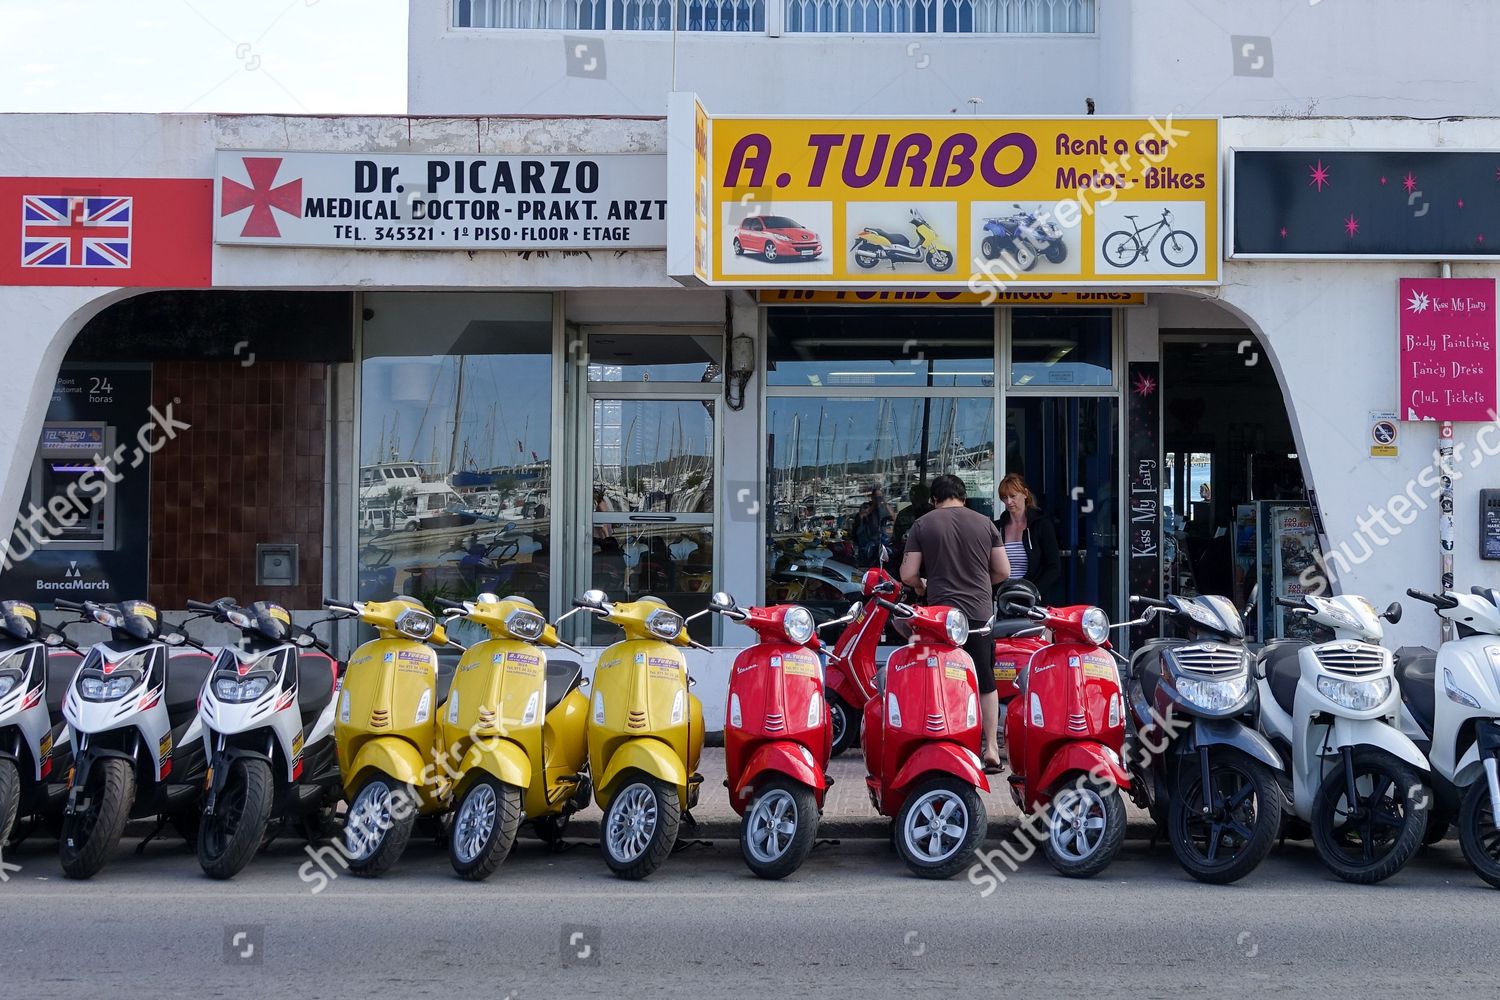 Scooter Shop San Antonio Ibiza - de stock de contenido editorial: stock | Shutterstock